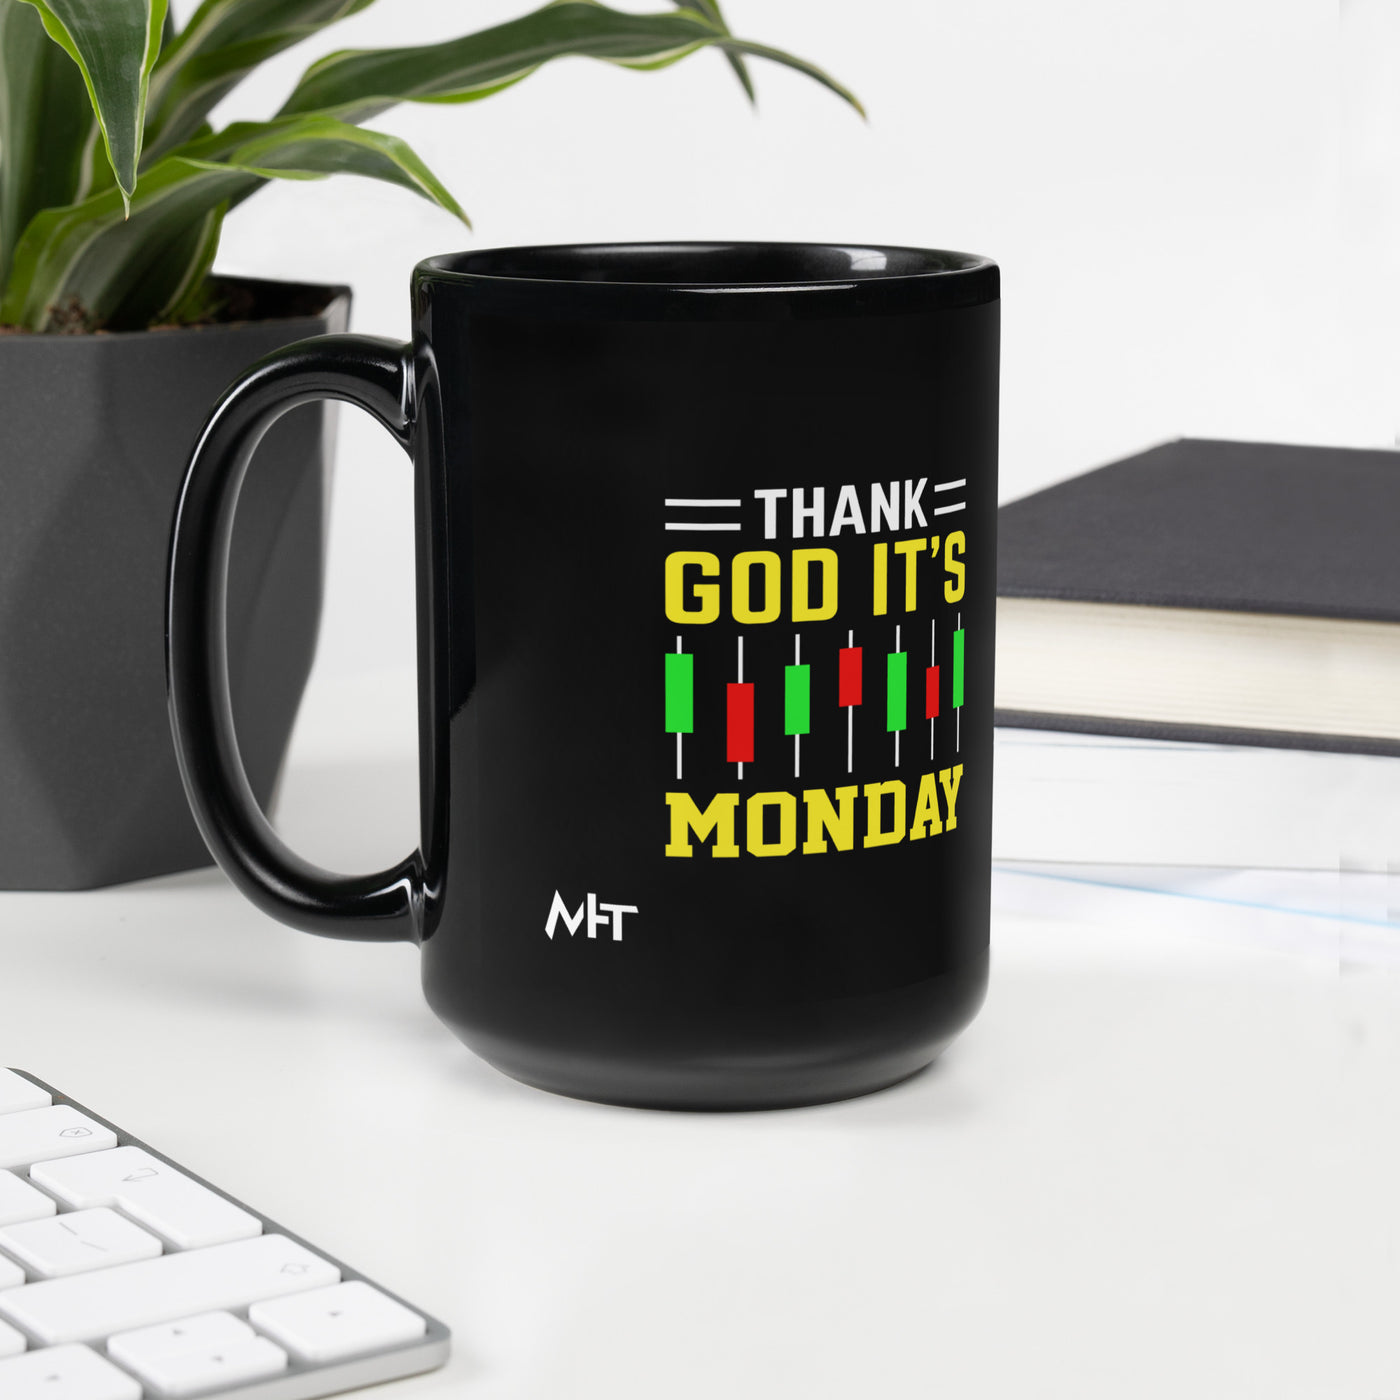 Thank God! It's Monday - Black Glossy Mug